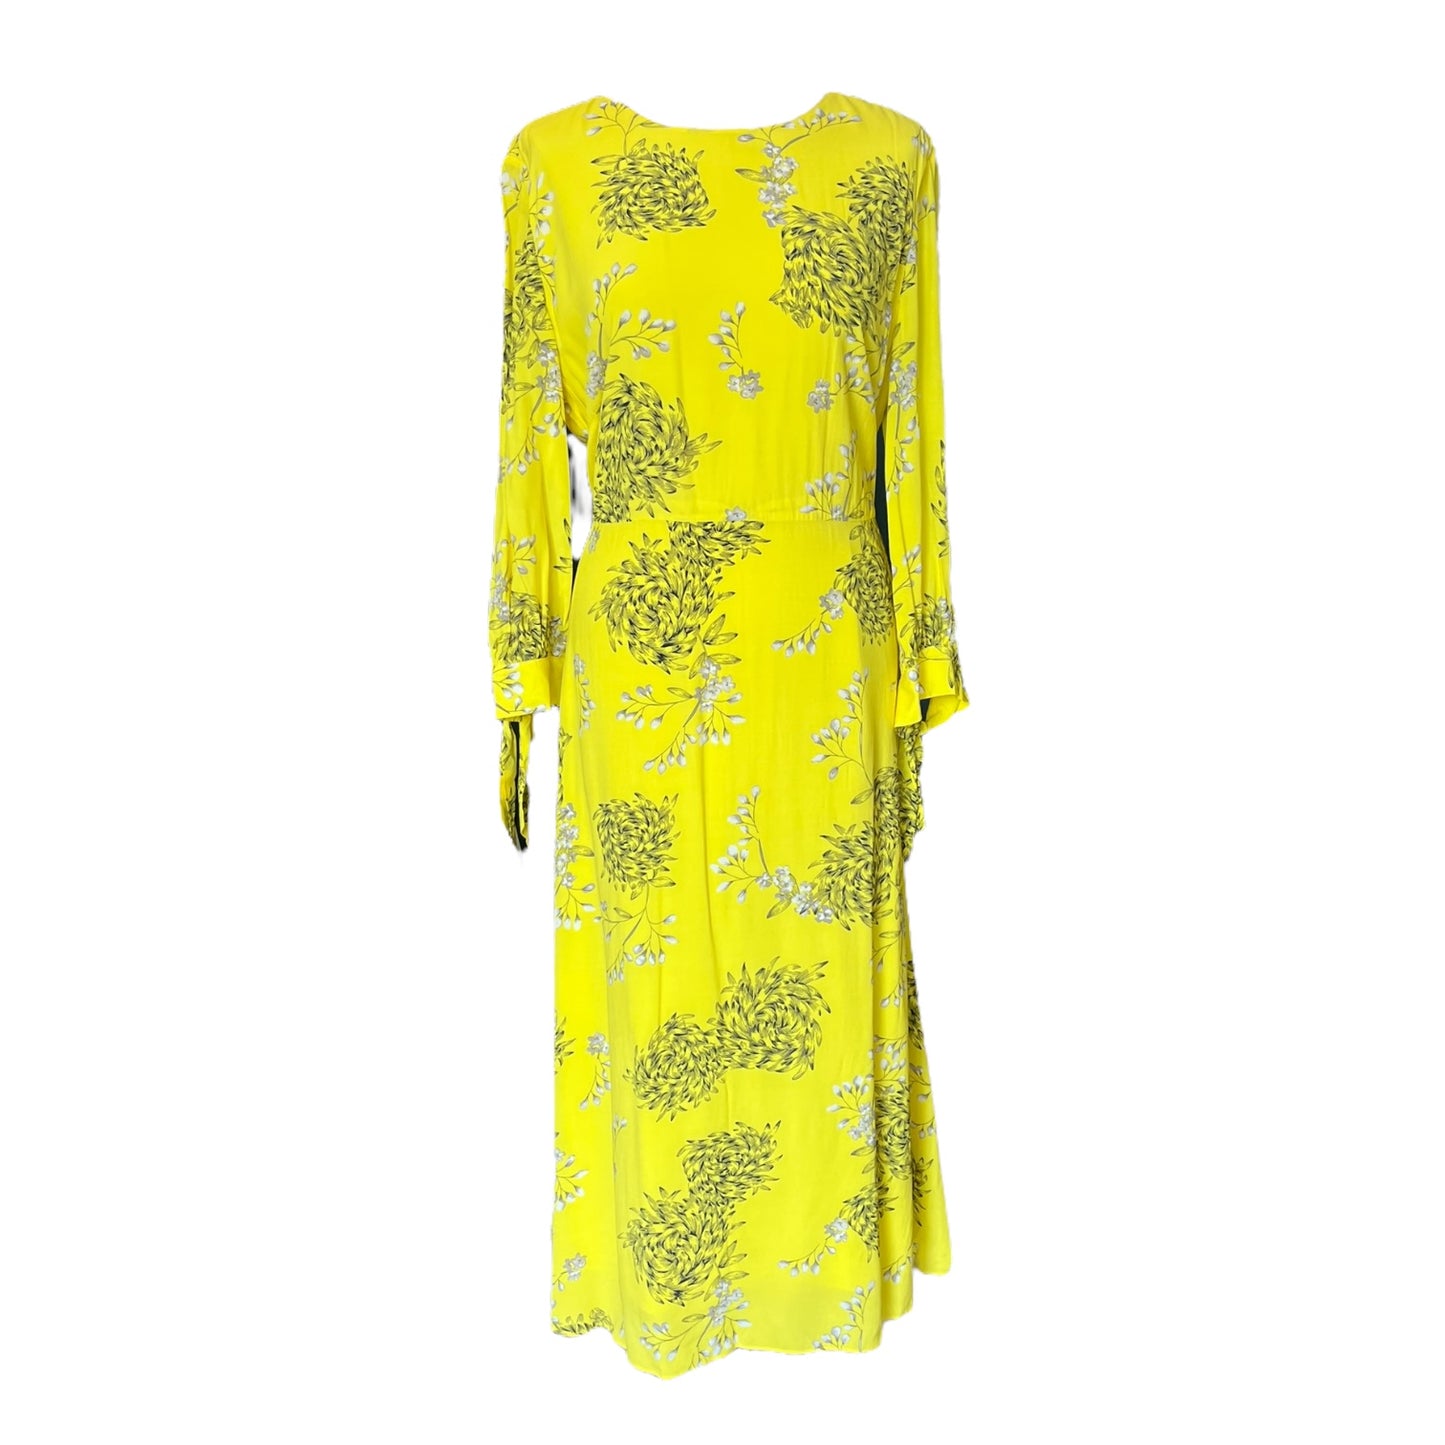 Mint Velvet Yellow Floral Dress - 16 - NEW